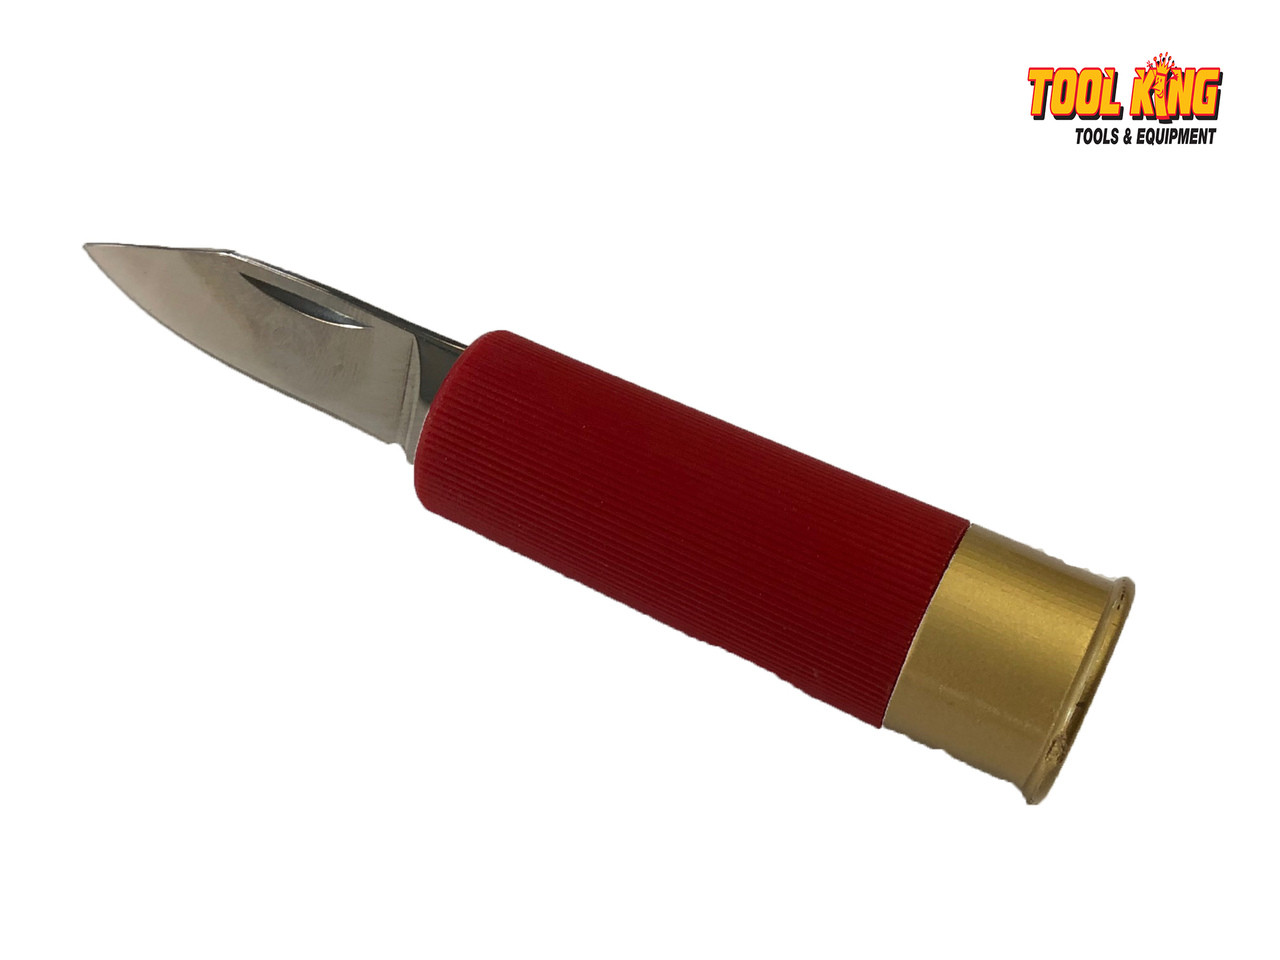 Pocket knife 12 Gauge shotgun shell bullet replica - Robson's Tool King  Store